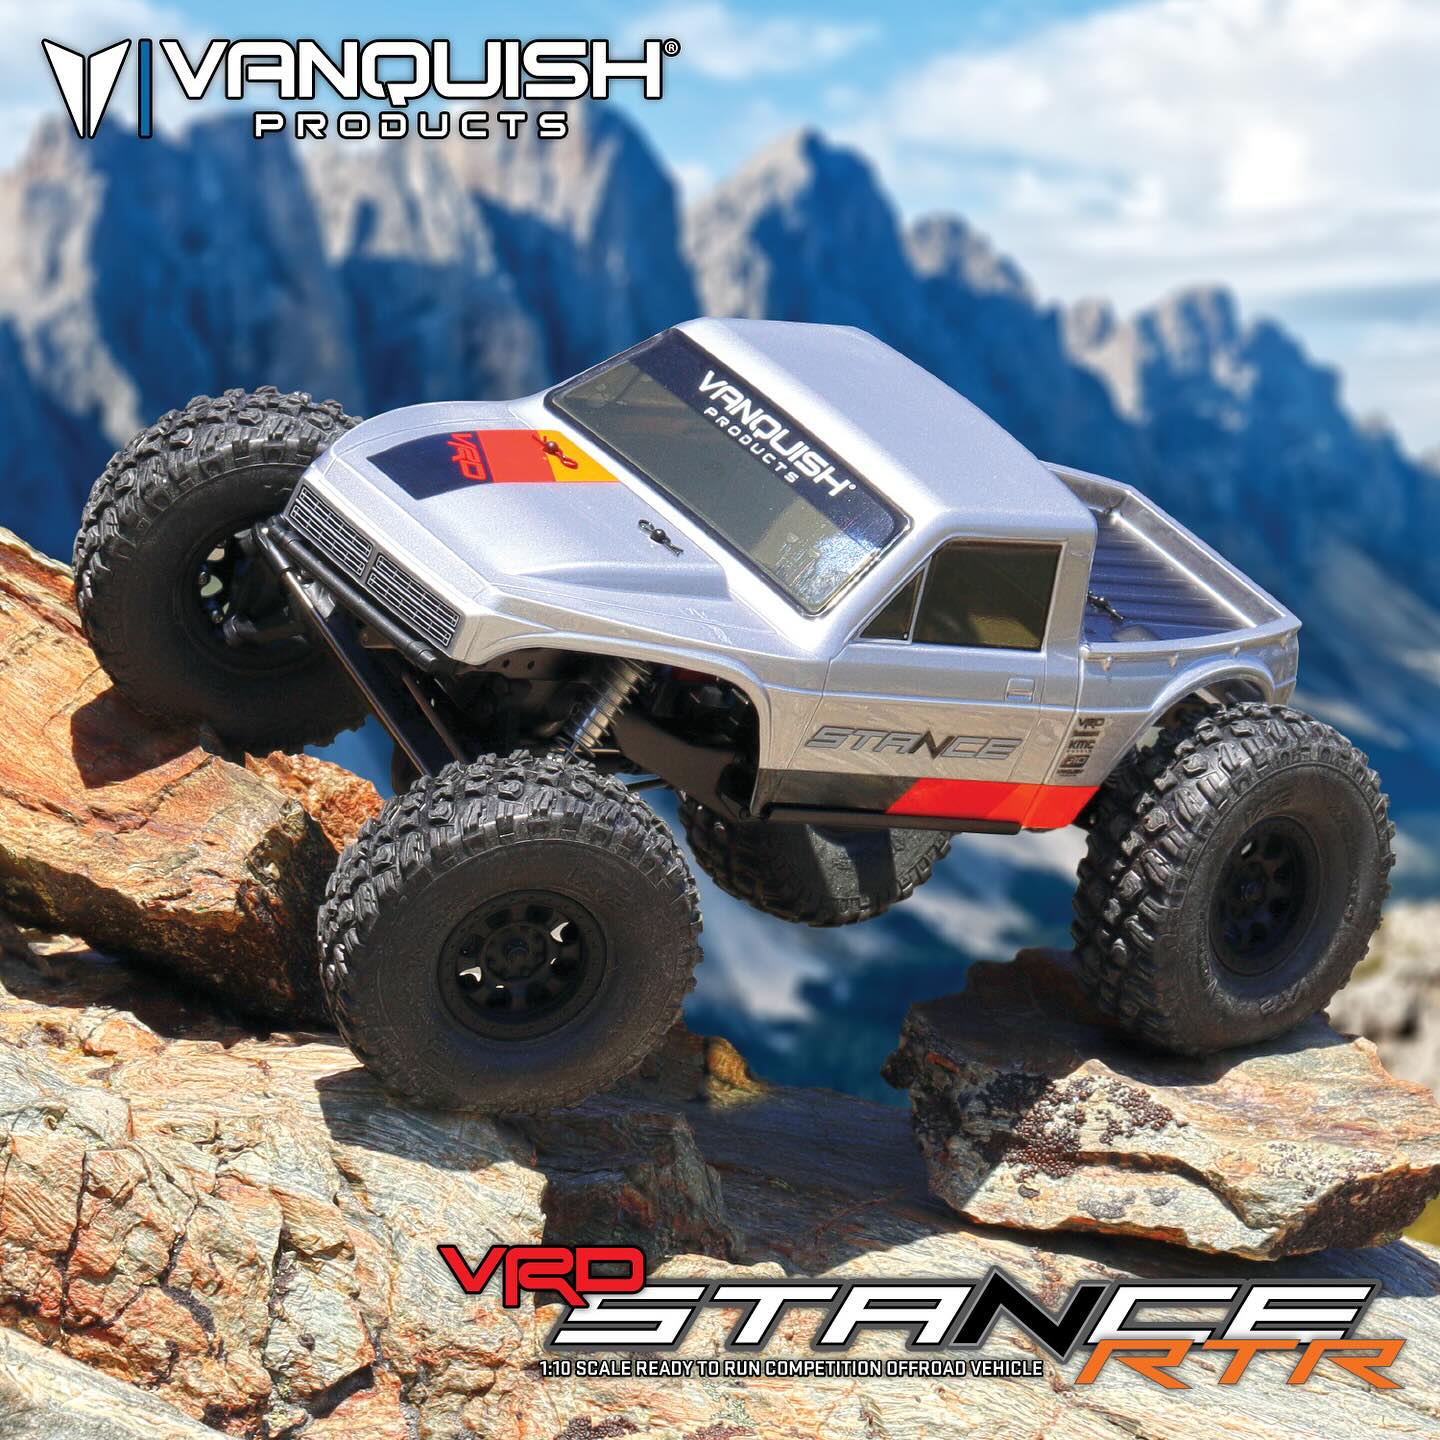 Vanquish Products VRD Stance RTR Rock Crawler